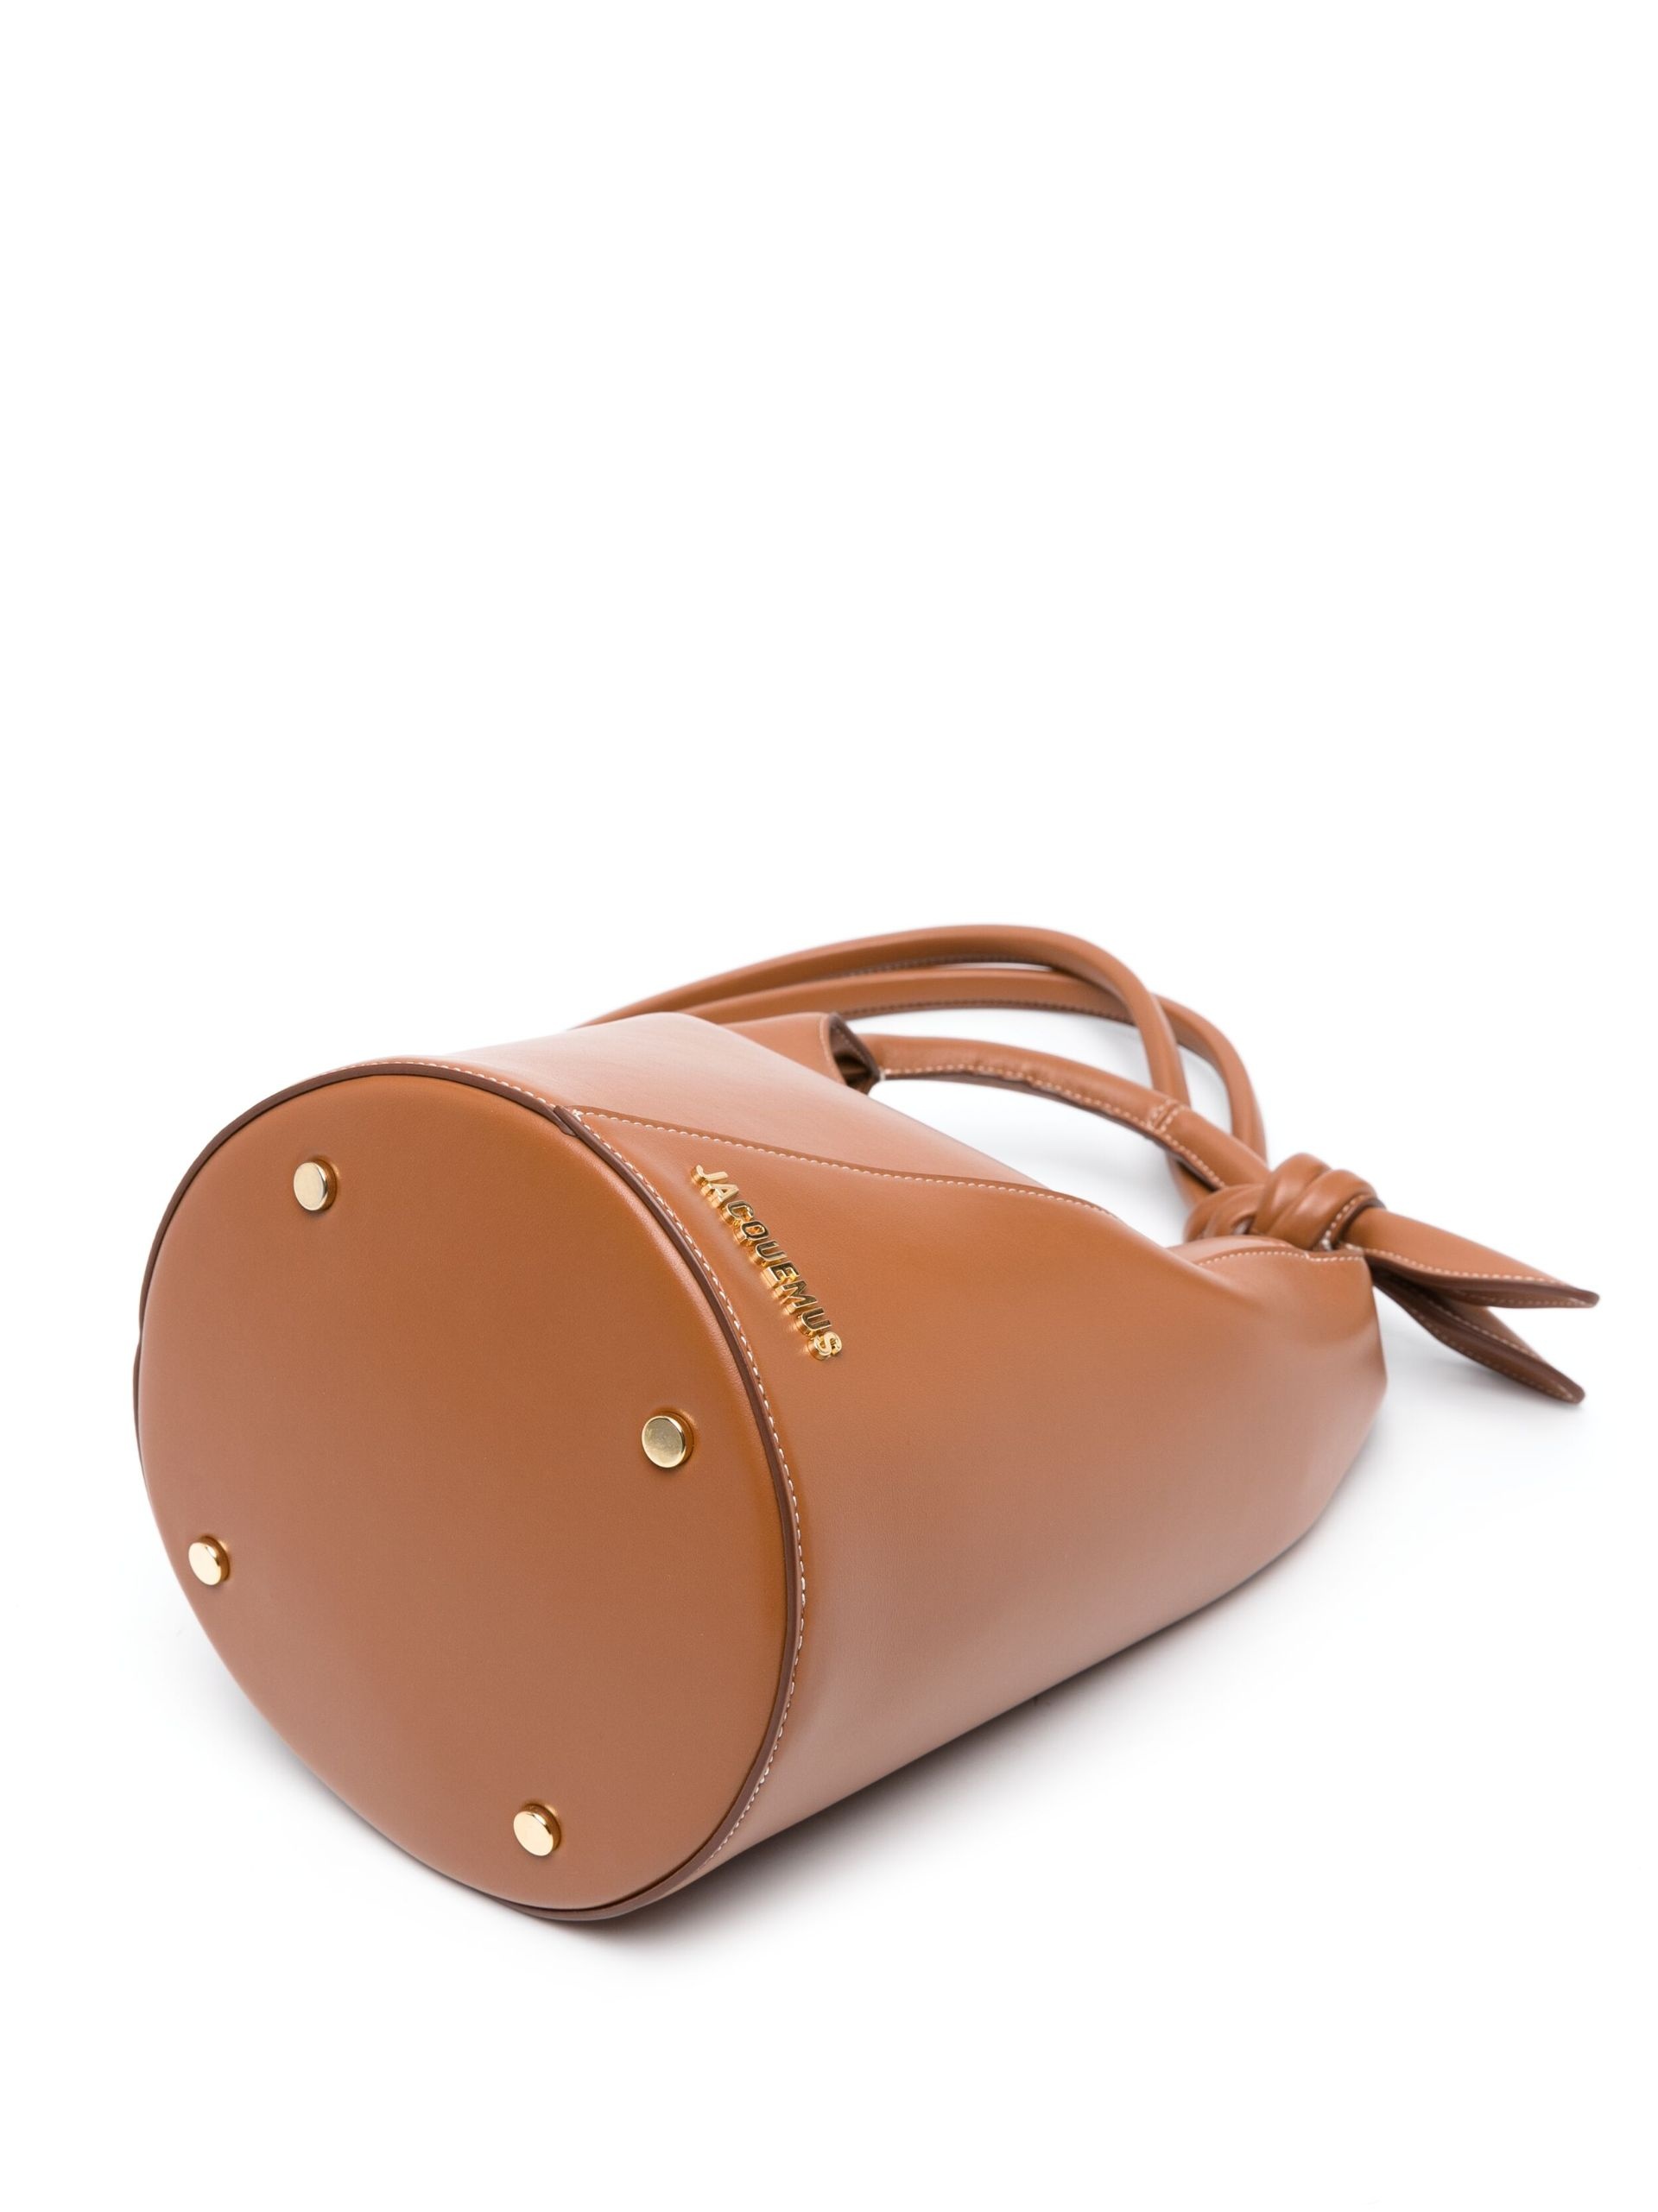 brown Le petit Tourni leather bucket bag. - 3